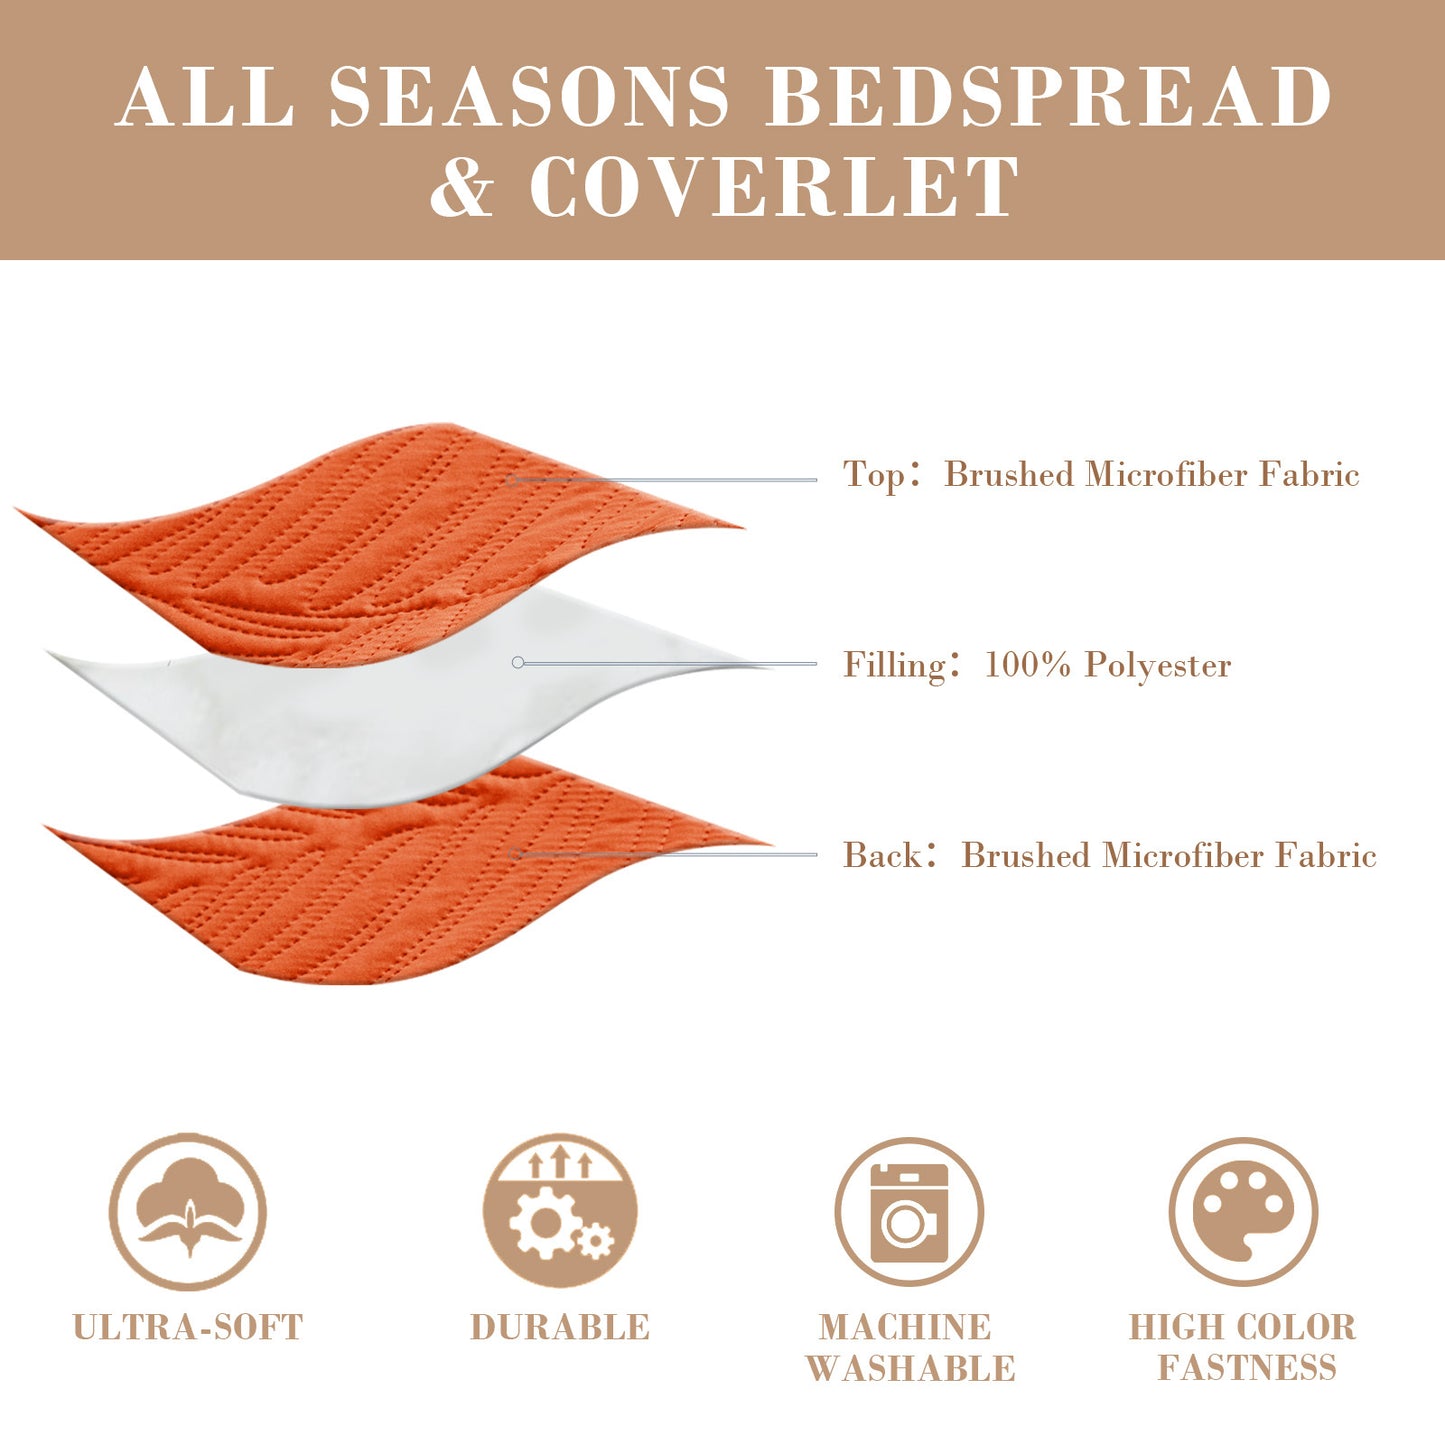 Exclusivo Mezcla California King Quilt Set Burnt Orange, Lightweight Bedspread Leaf Pattern Bed Cover Soft Coverlet Bedding Set(1 Quilt, 2 Pillow Shams)